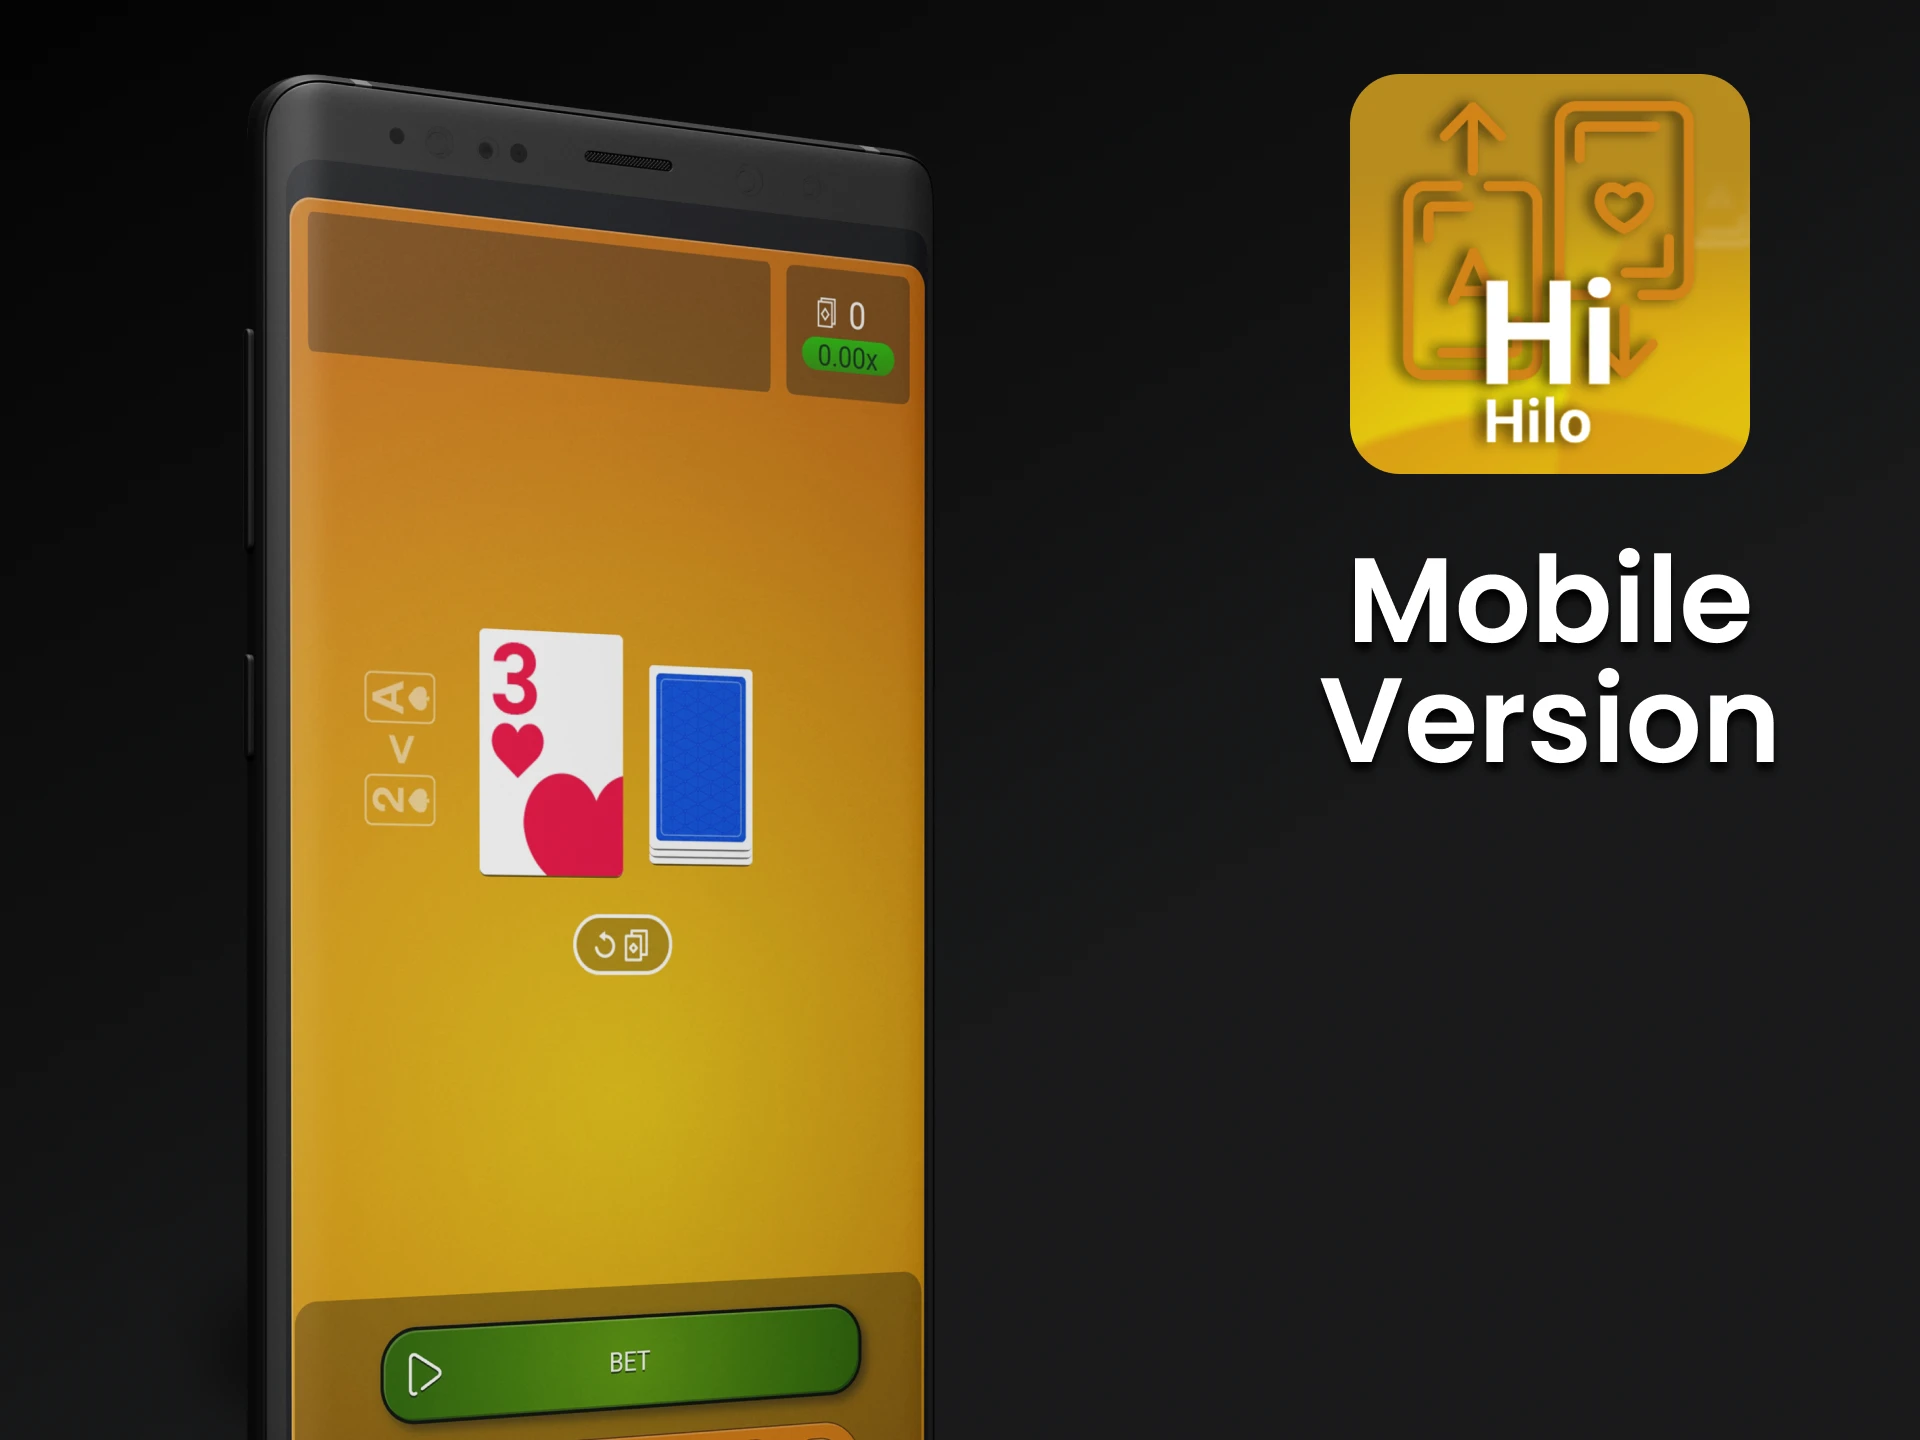 Play Hilo through the mobile app.